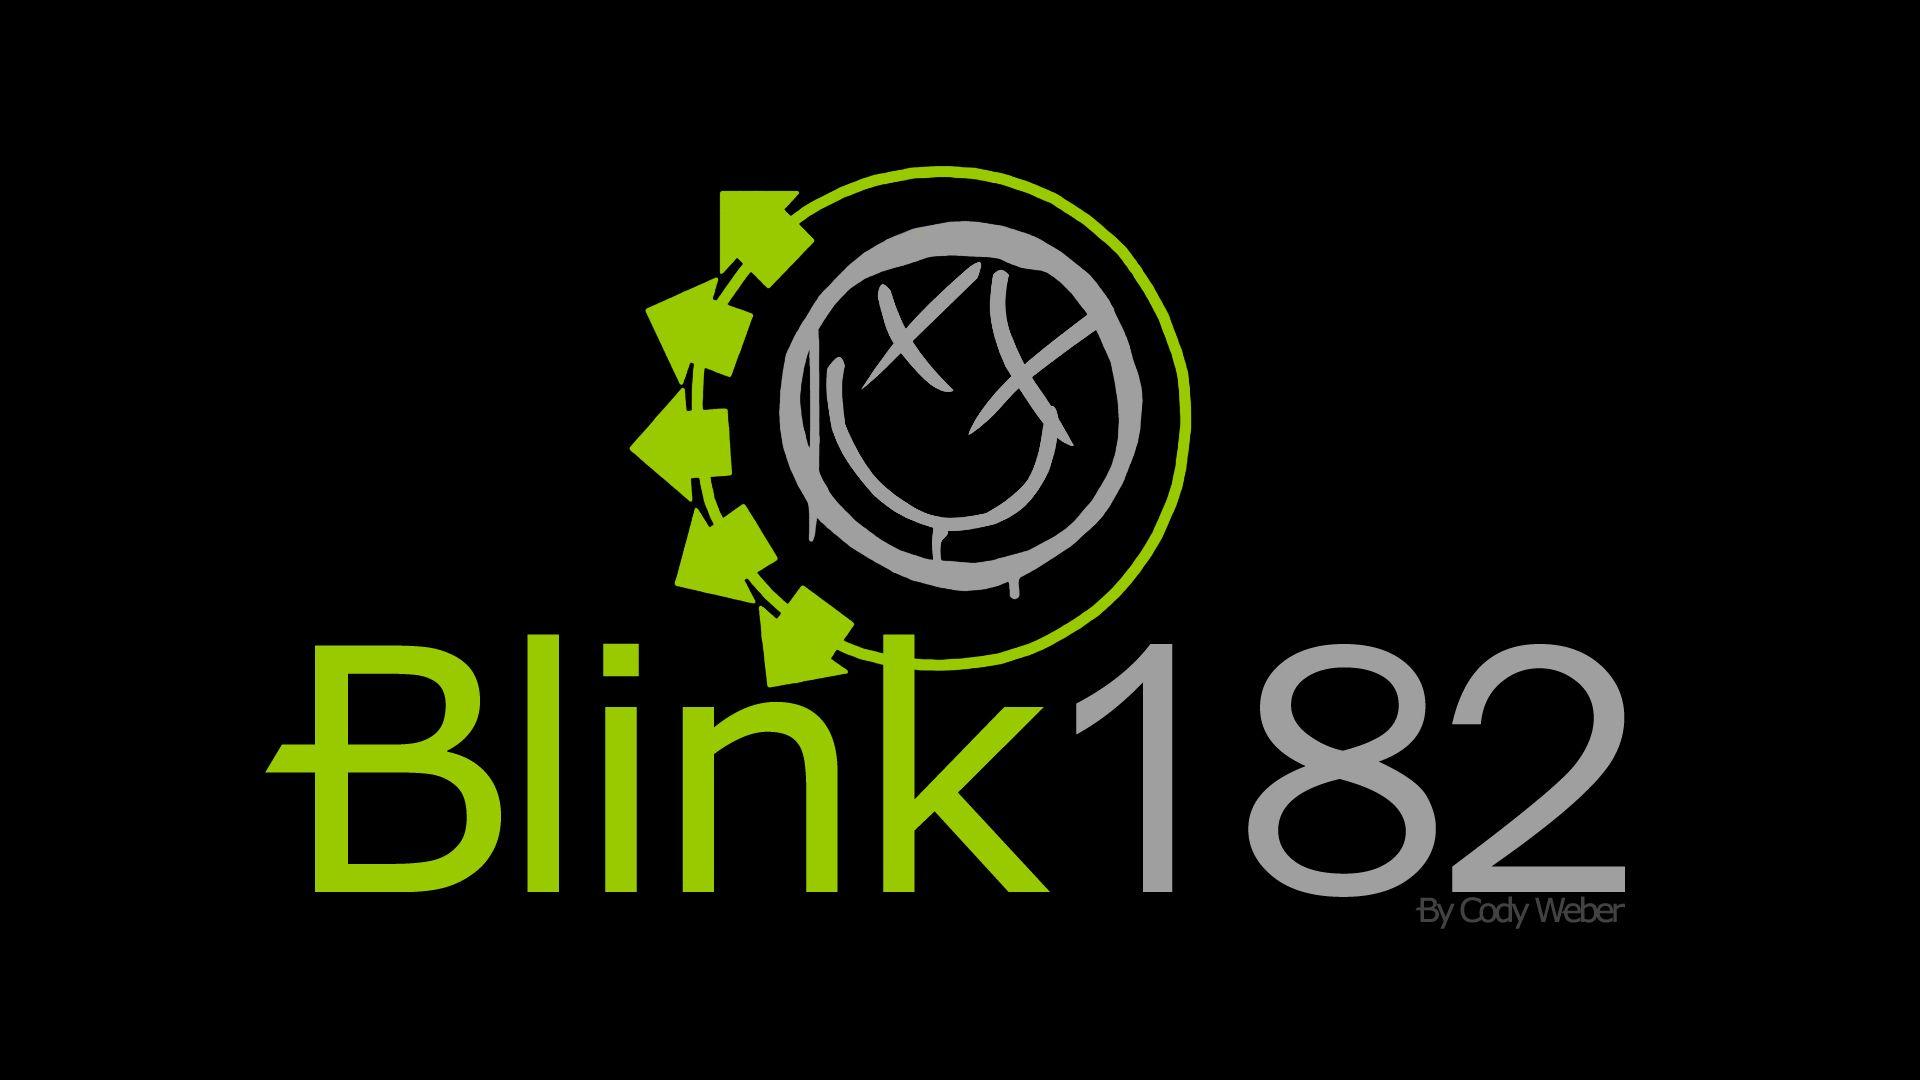 Blink 182 Logo Wallpaper Download HD Wallpaper Widescreen. Blink 182 wallpaper, Blink 182 logo, Blink 182